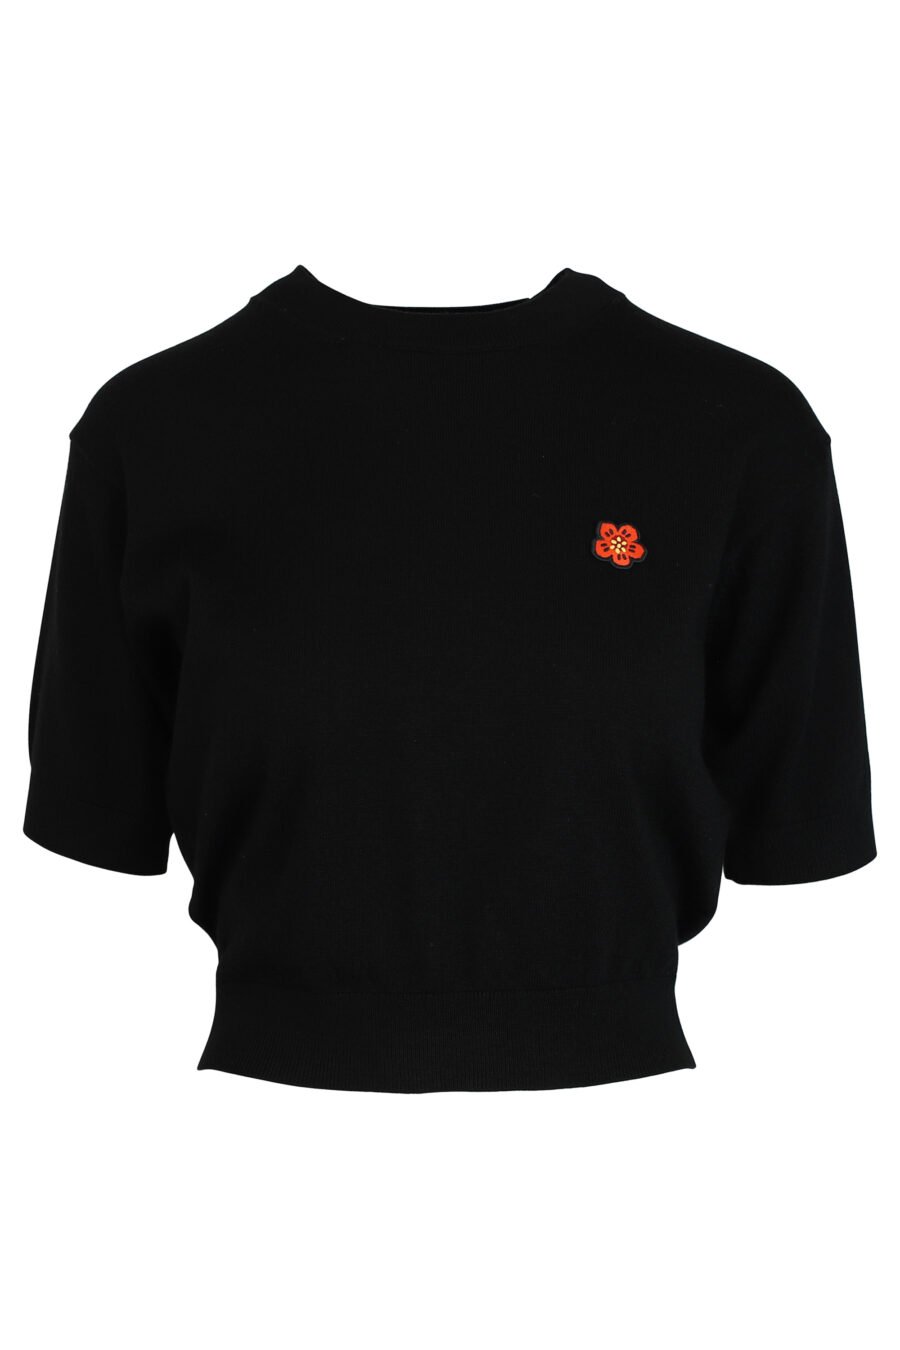 Black jumper with orange mini-logo - 3612230446106